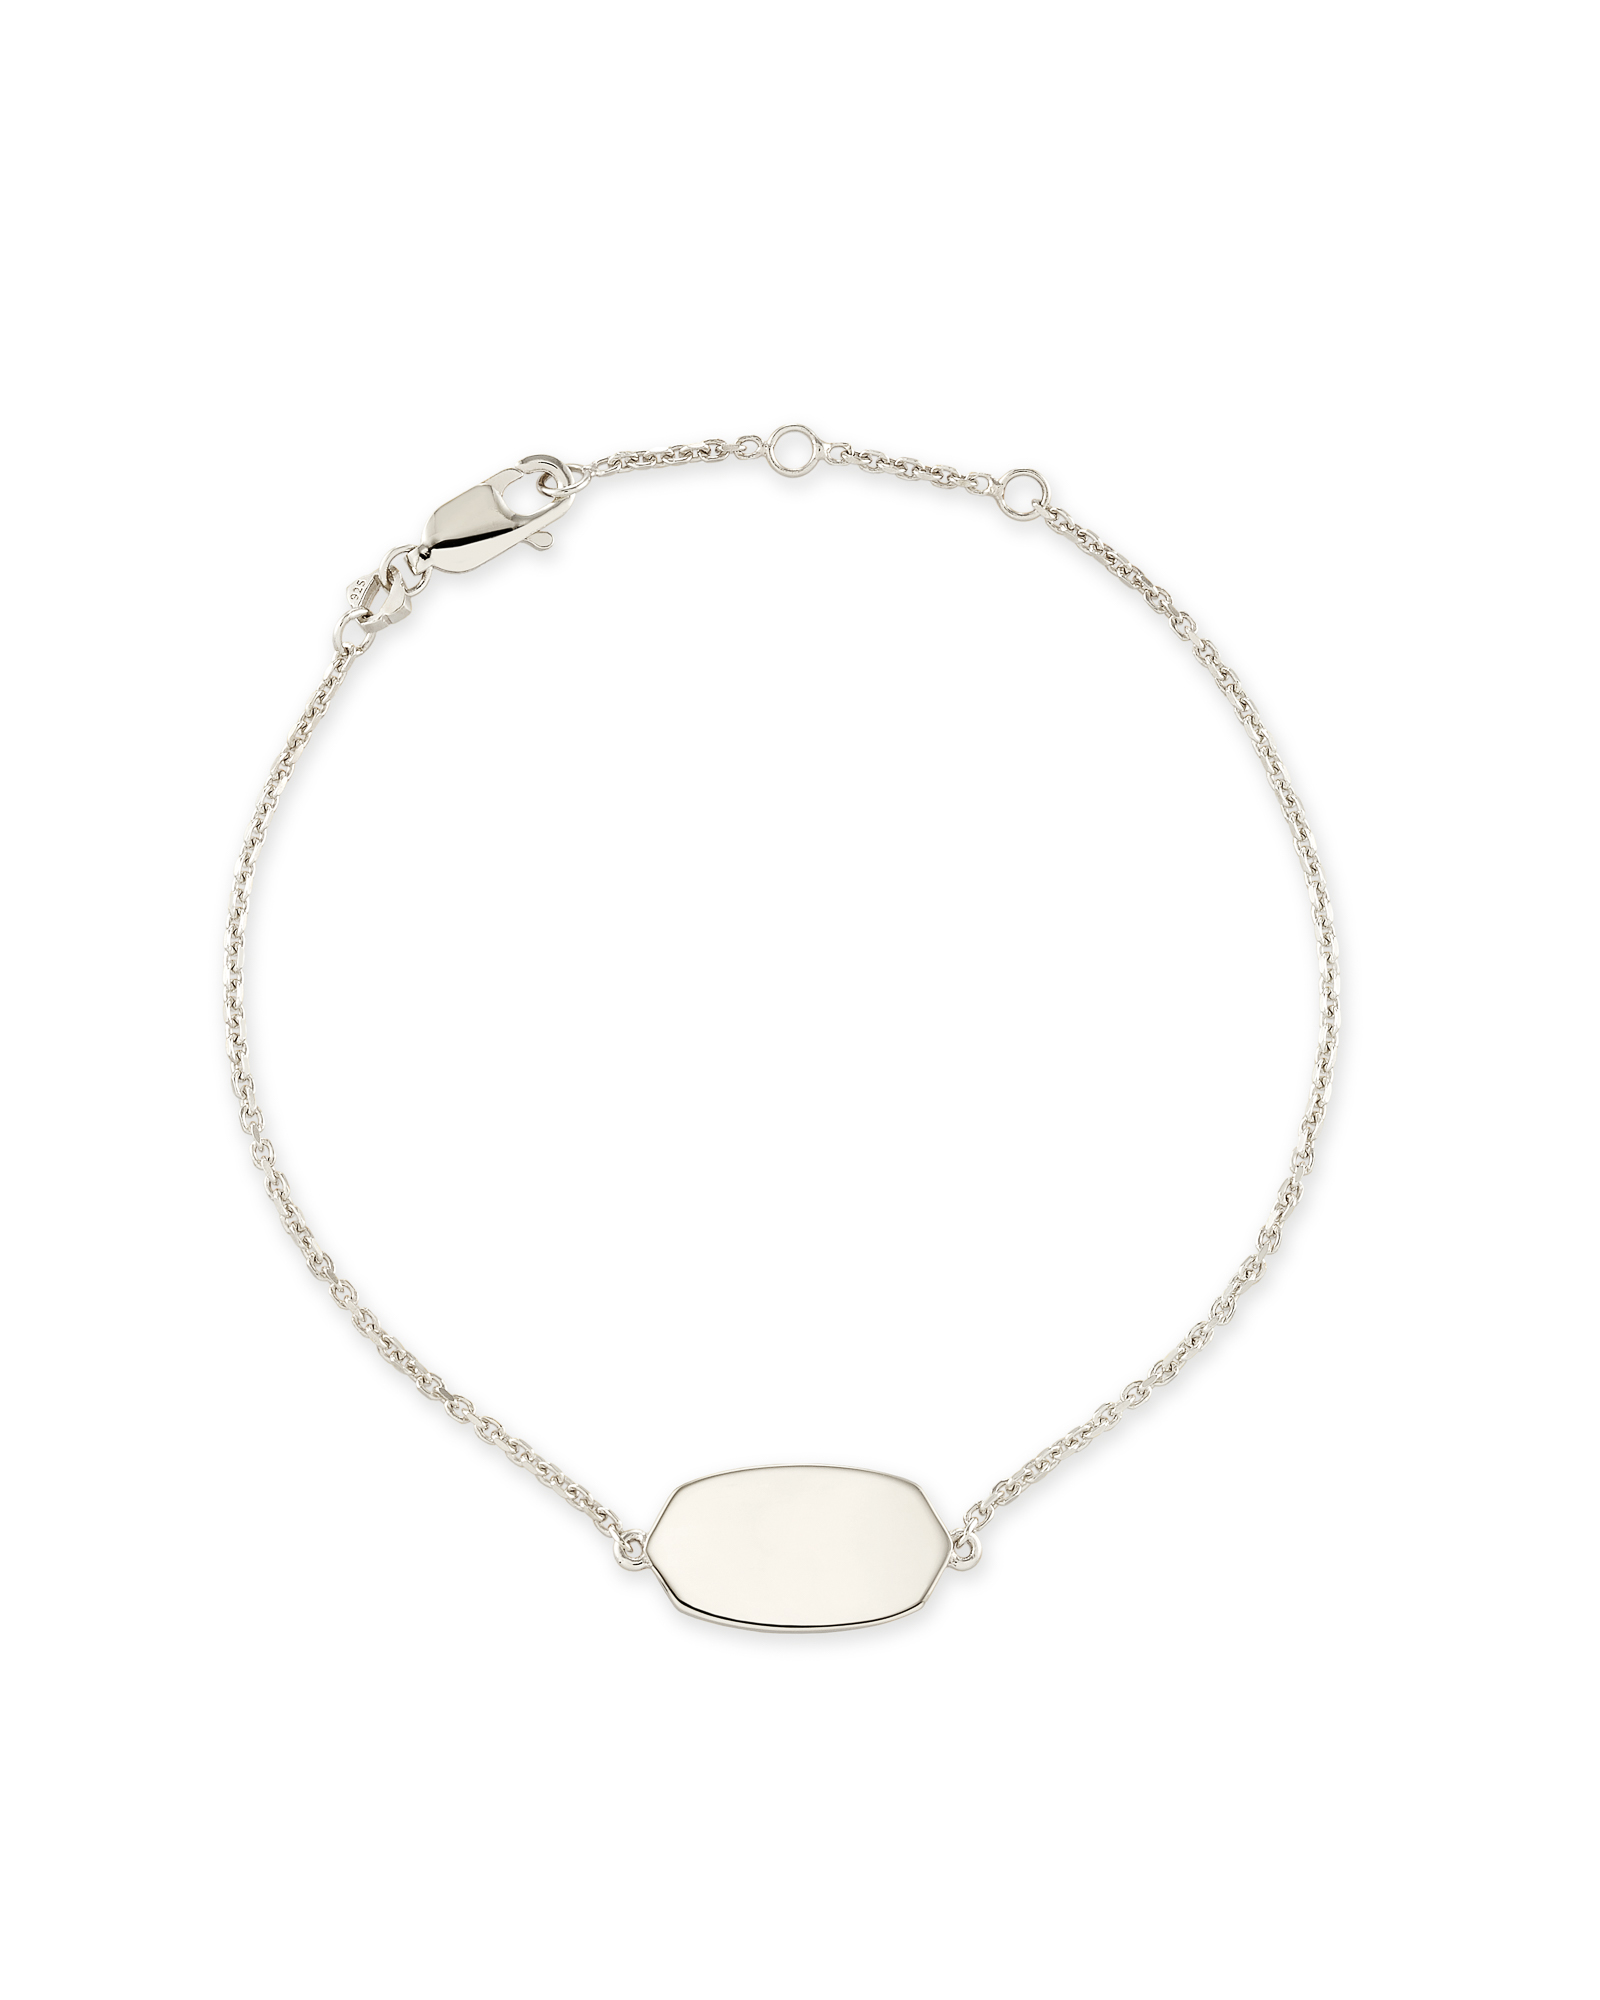 Elaina Delicate Chain Bracelet in Sterling Silver | Kendra Scott